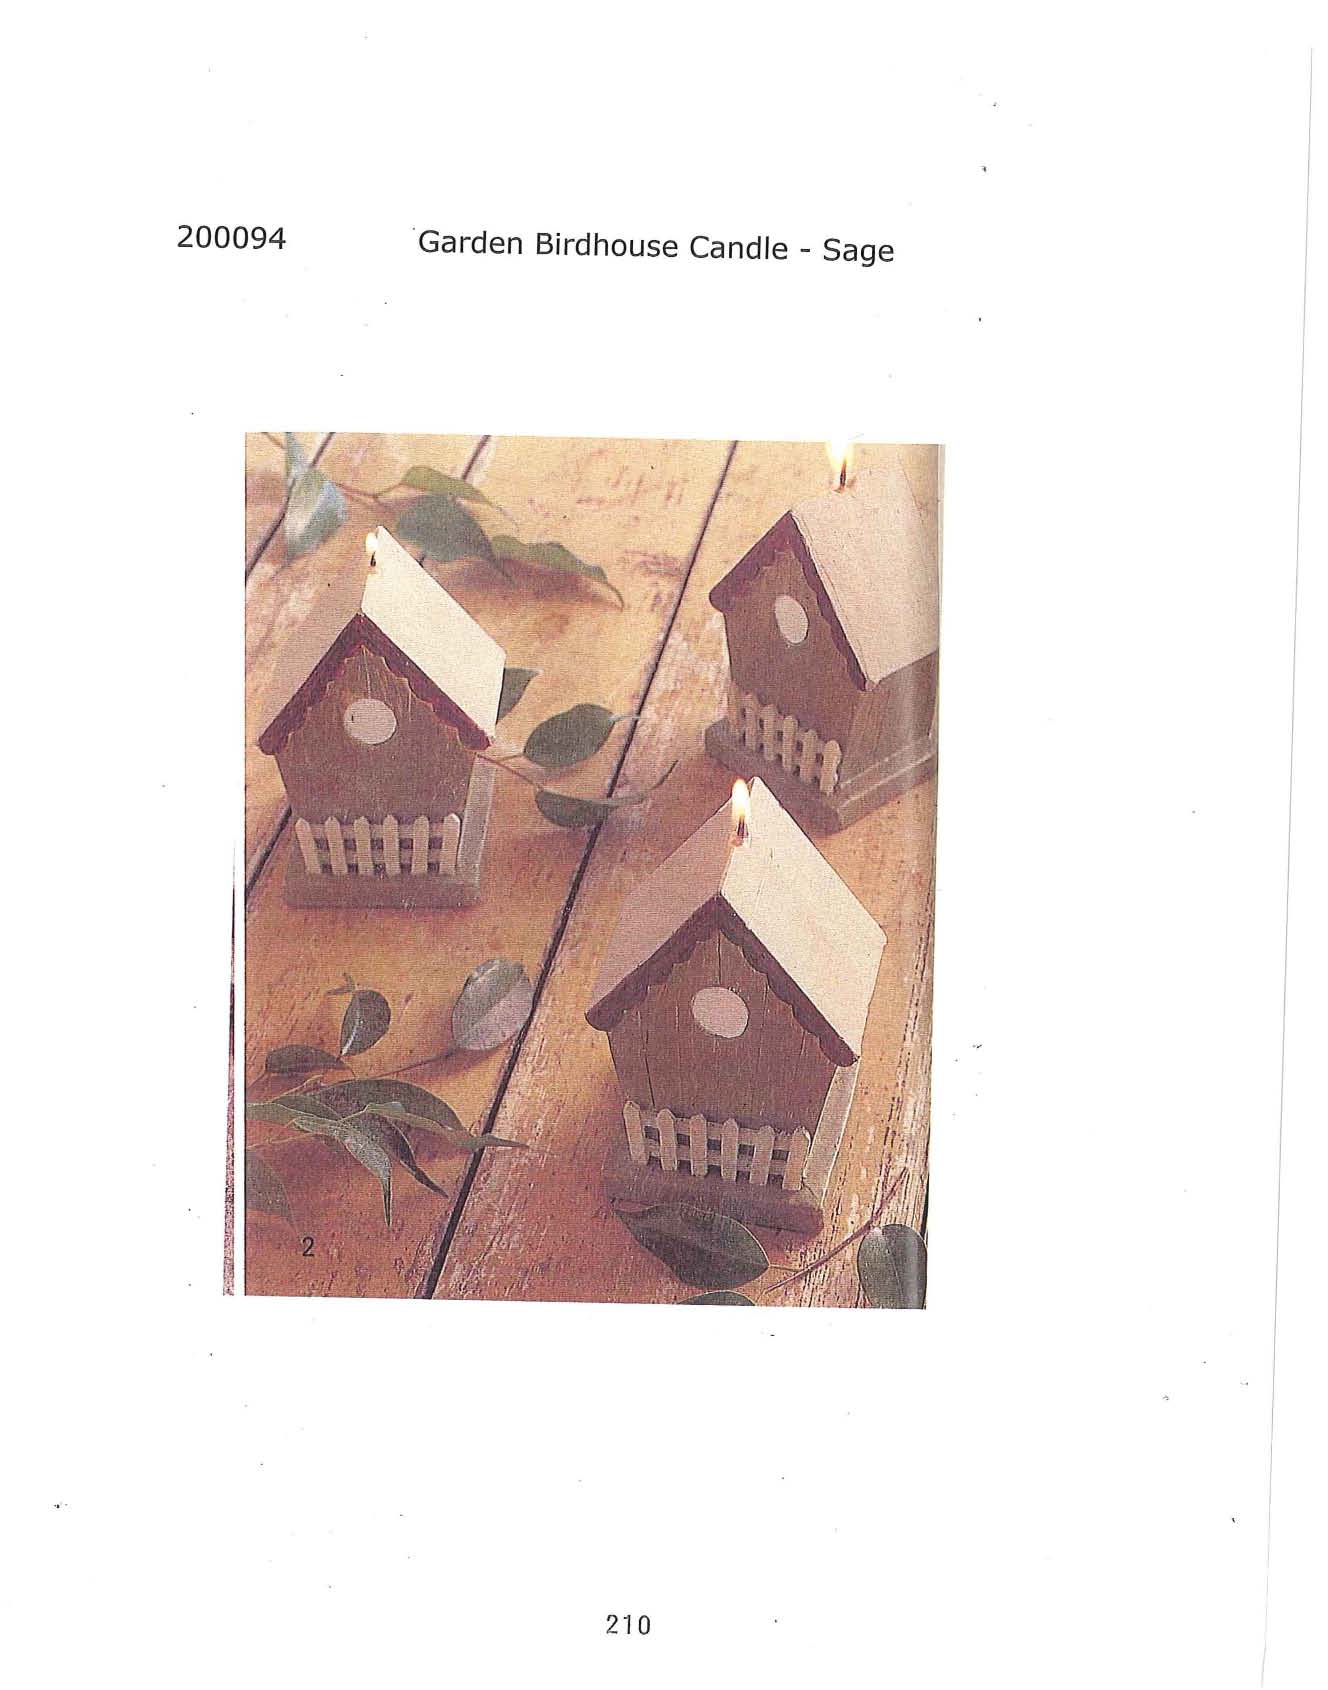 Garden Birdhouse Candle - Sage